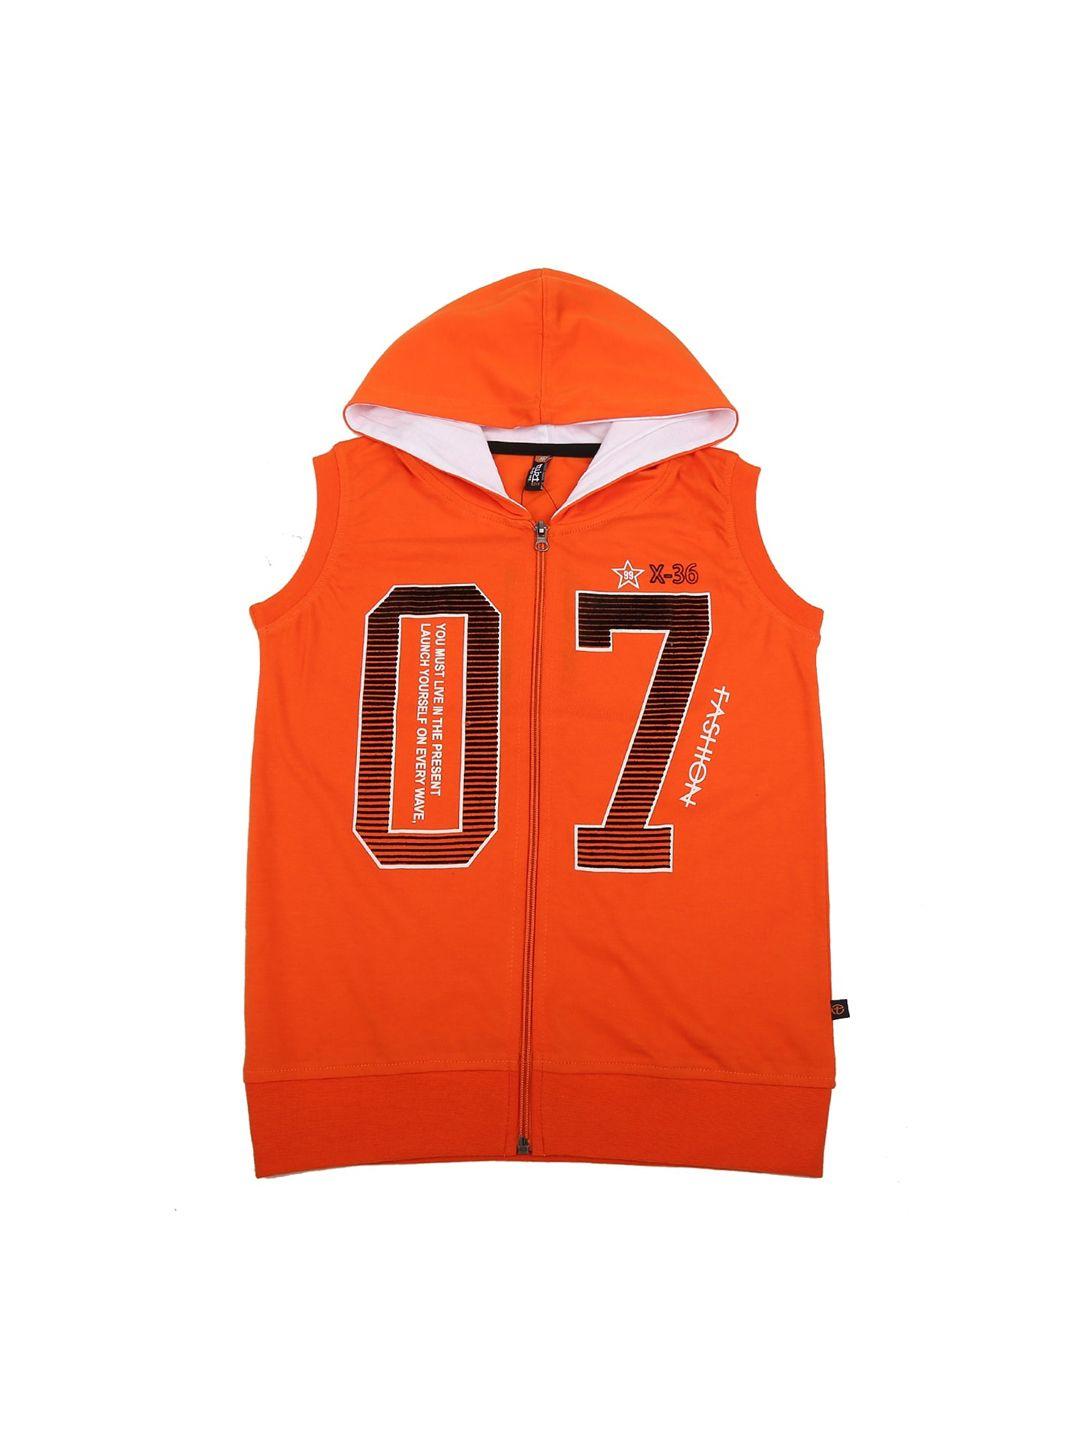 v-mart boys orange innerwear vests